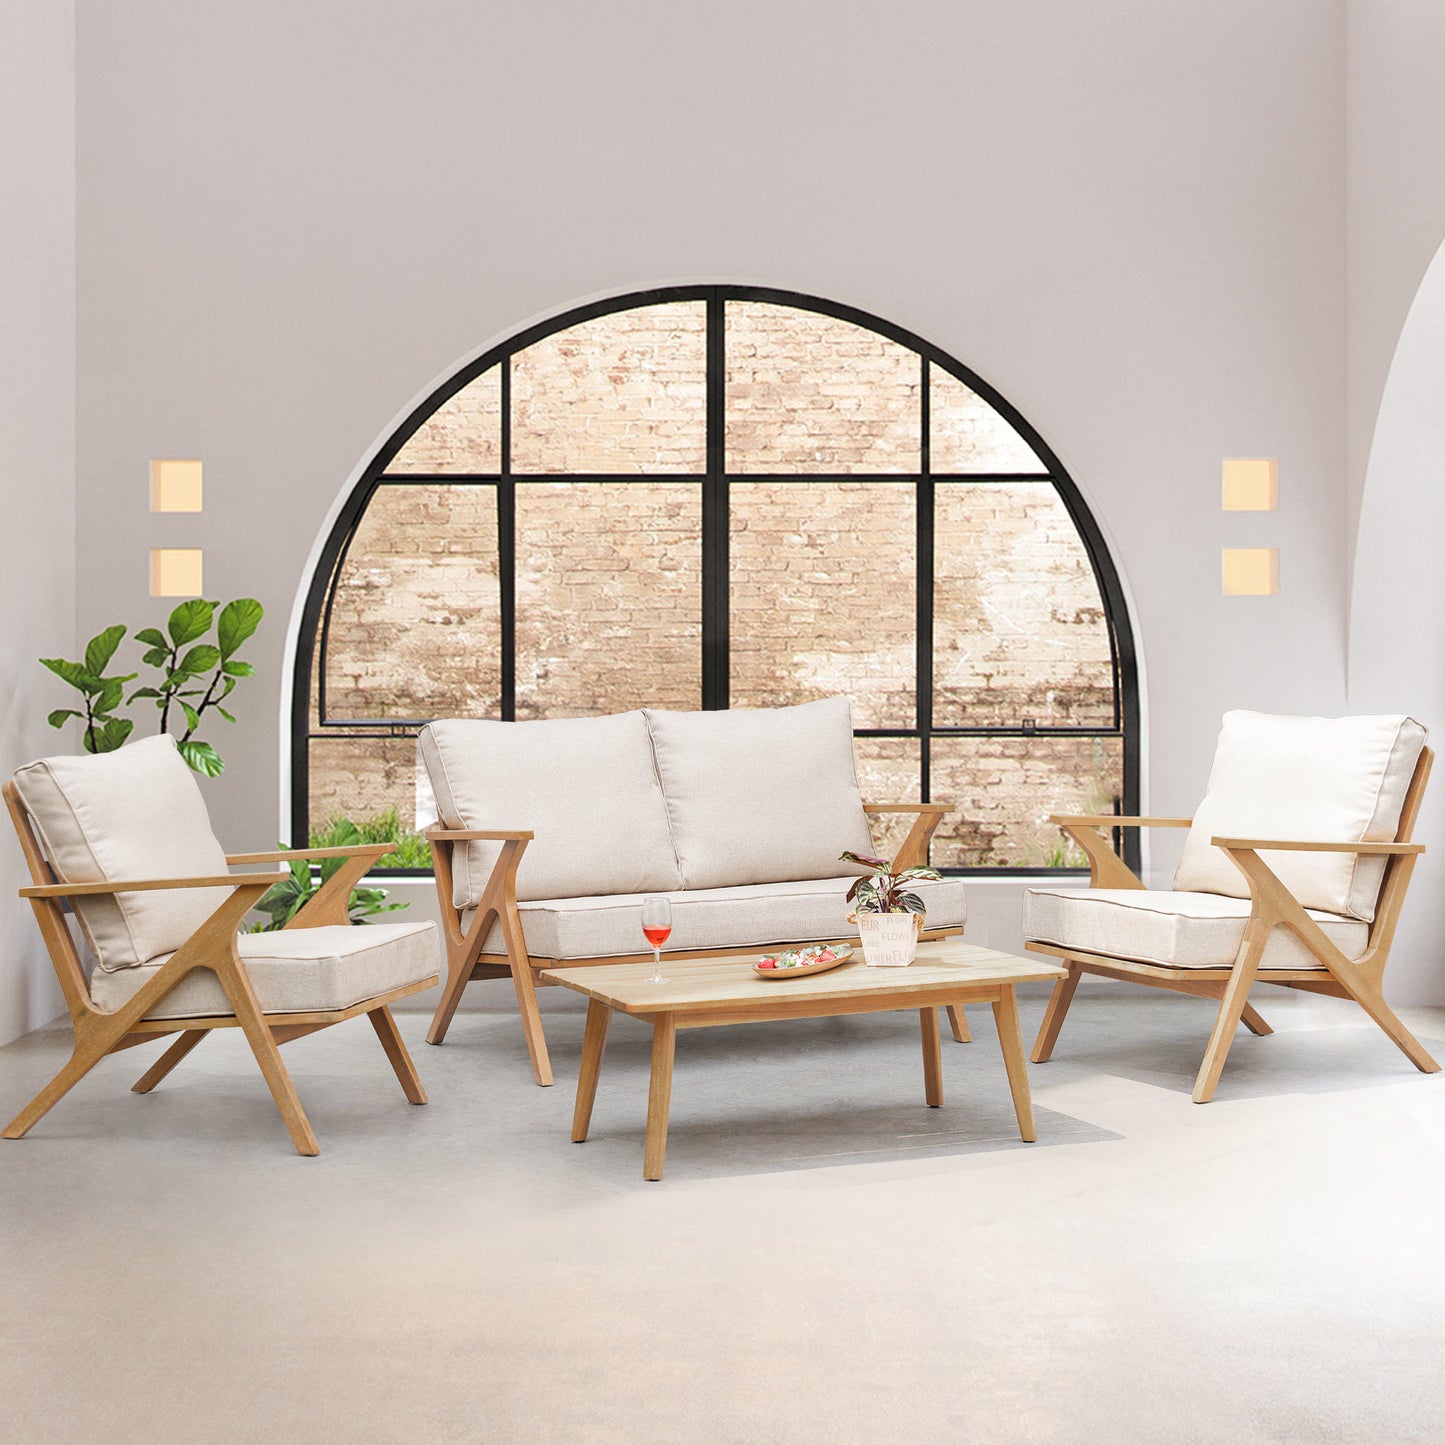 4 PCS Acacia Wood Patio Furniture Set with Grey Cushions & Back Pillow